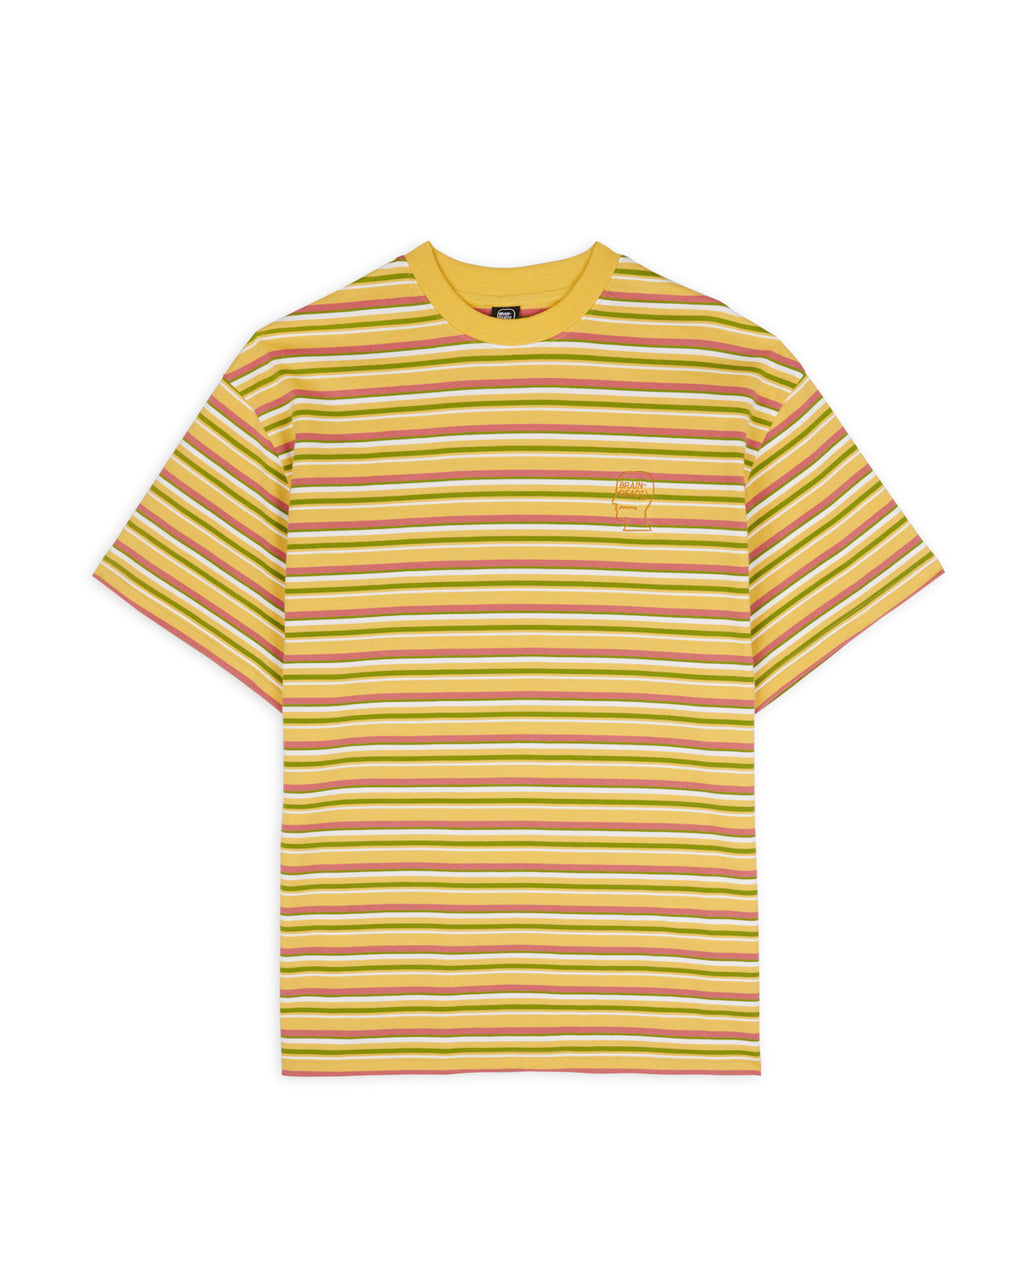 Nineties Blocked Striped T-Shirt - Mustard 1